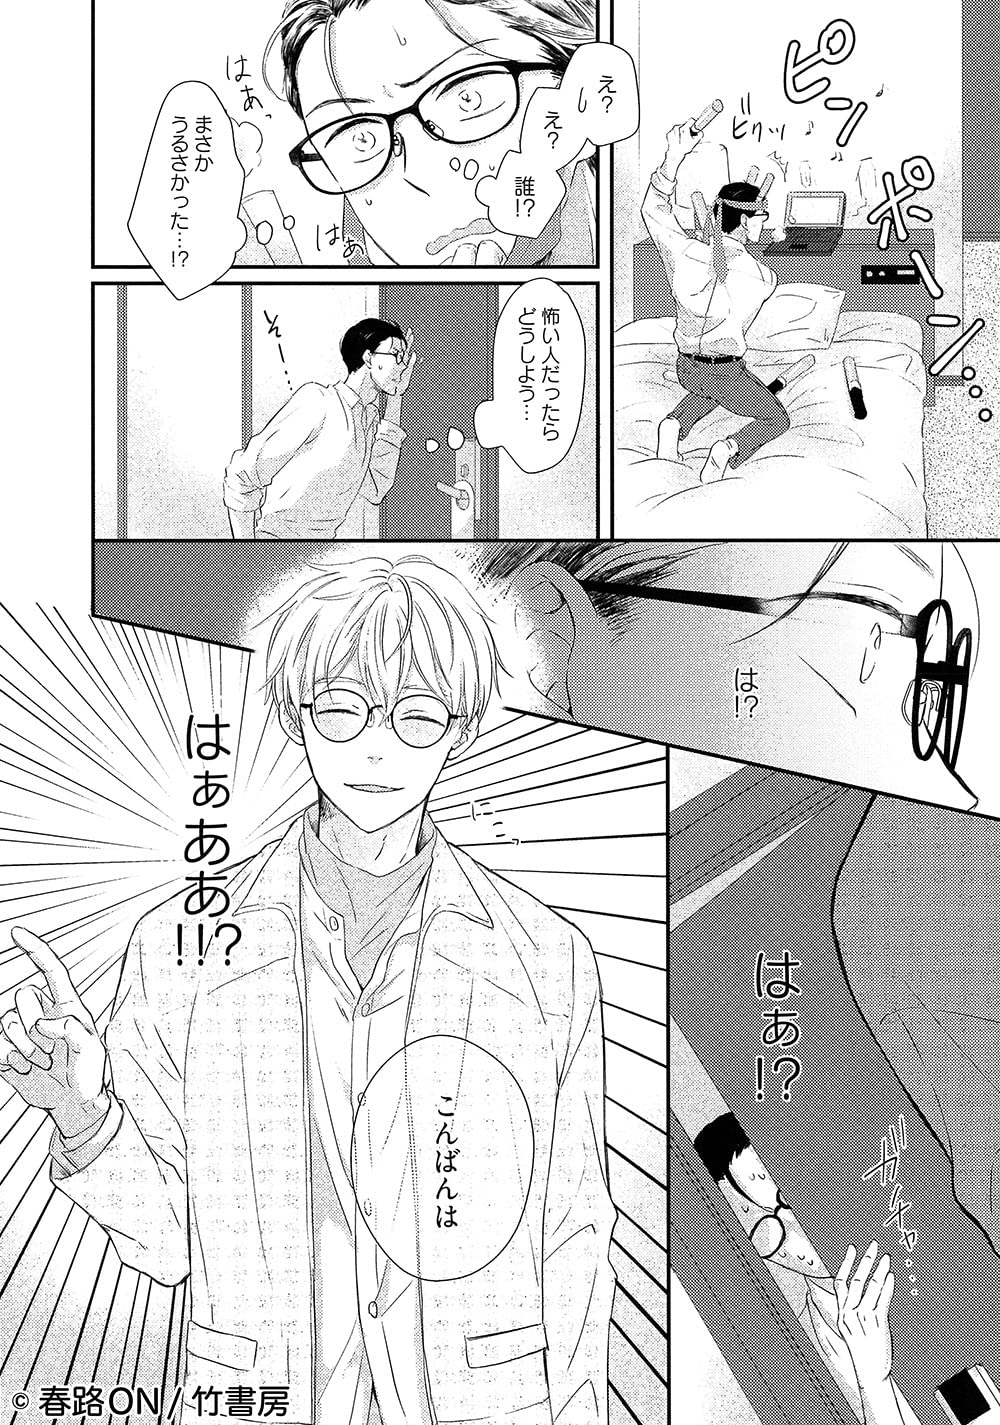 Boys Love (Yaoi) Comics - Oshi no Fansa ga Erosugidesu (推しのファンサがエロすぎです! (バンブー・コミックス REIJIN uno!)) / Harujion